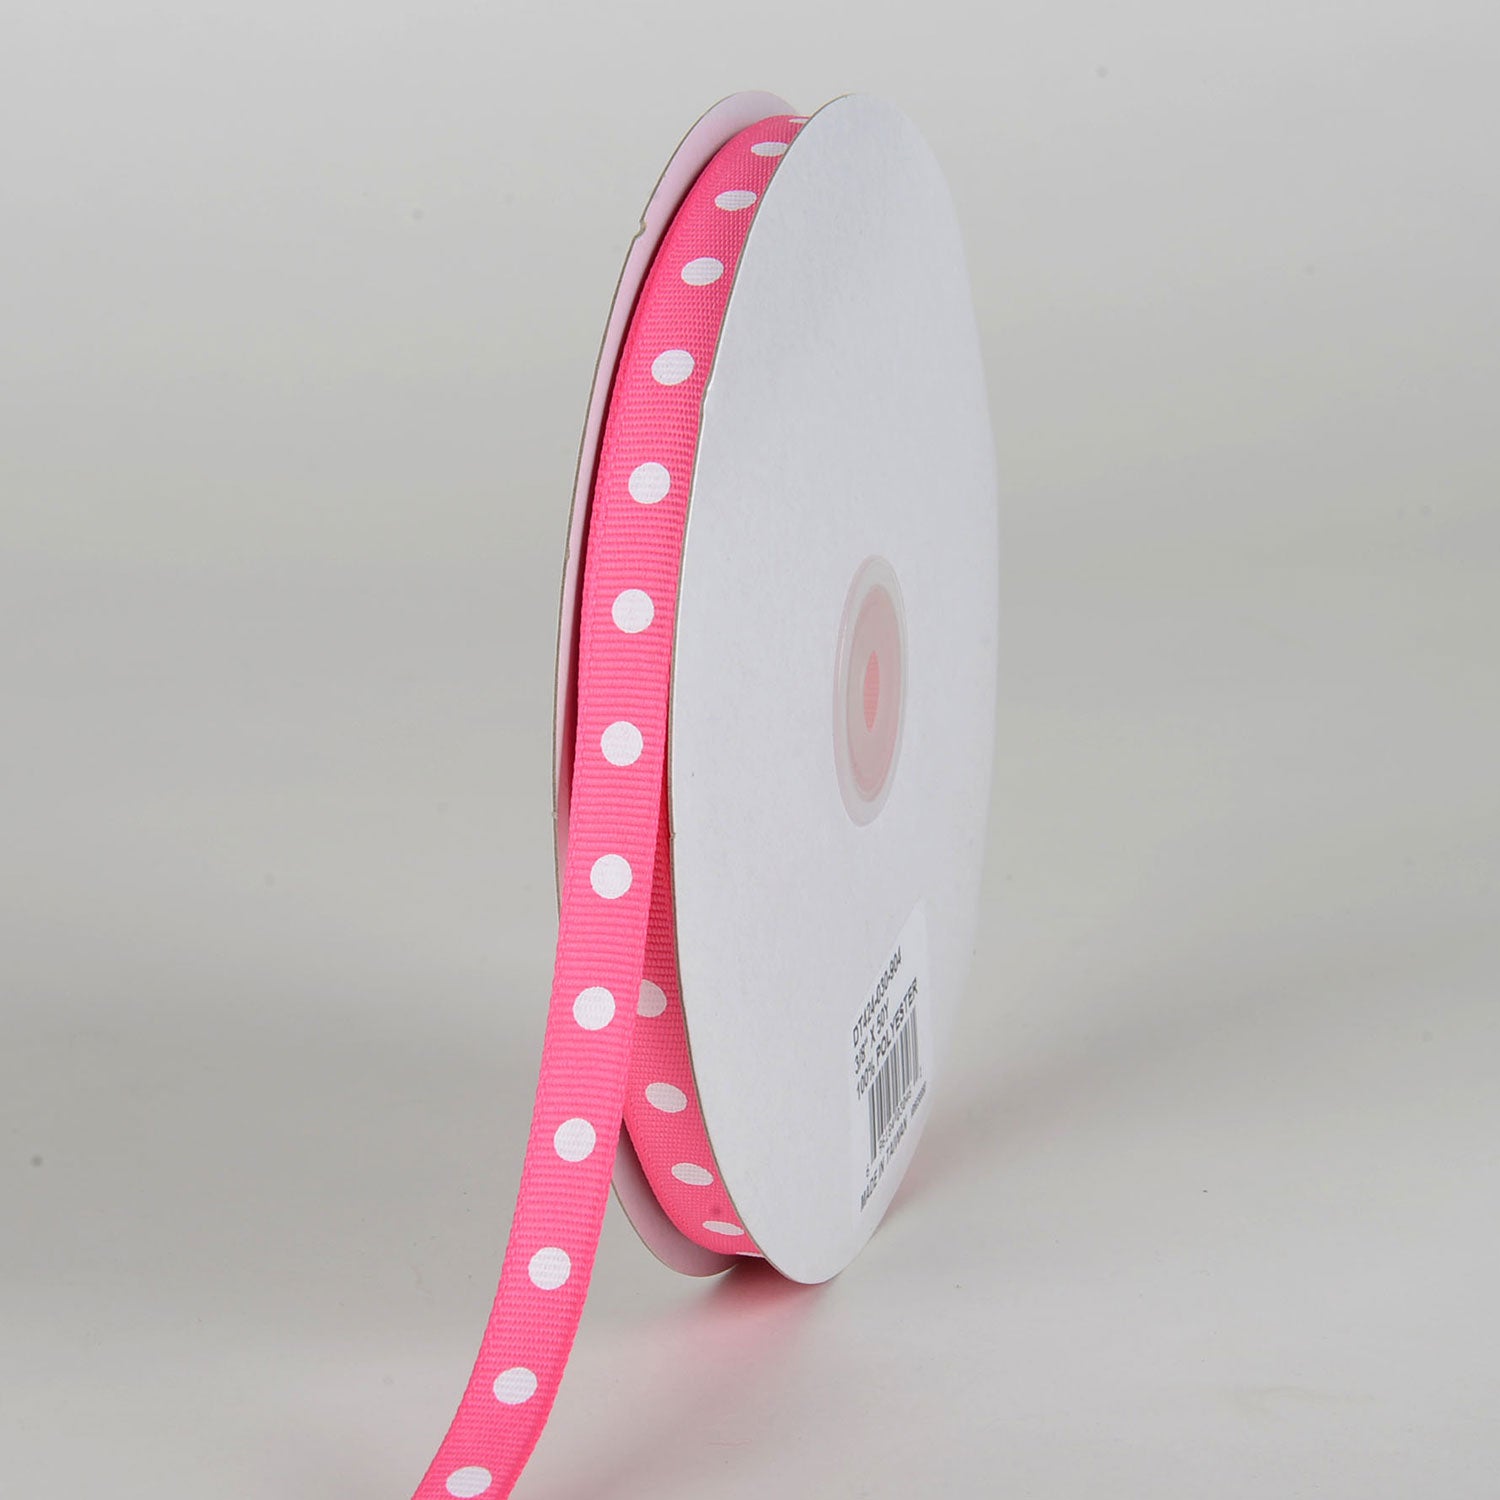 Hot Pink 3/8 Stretch Grosgrain Ribbon (50 yds)*